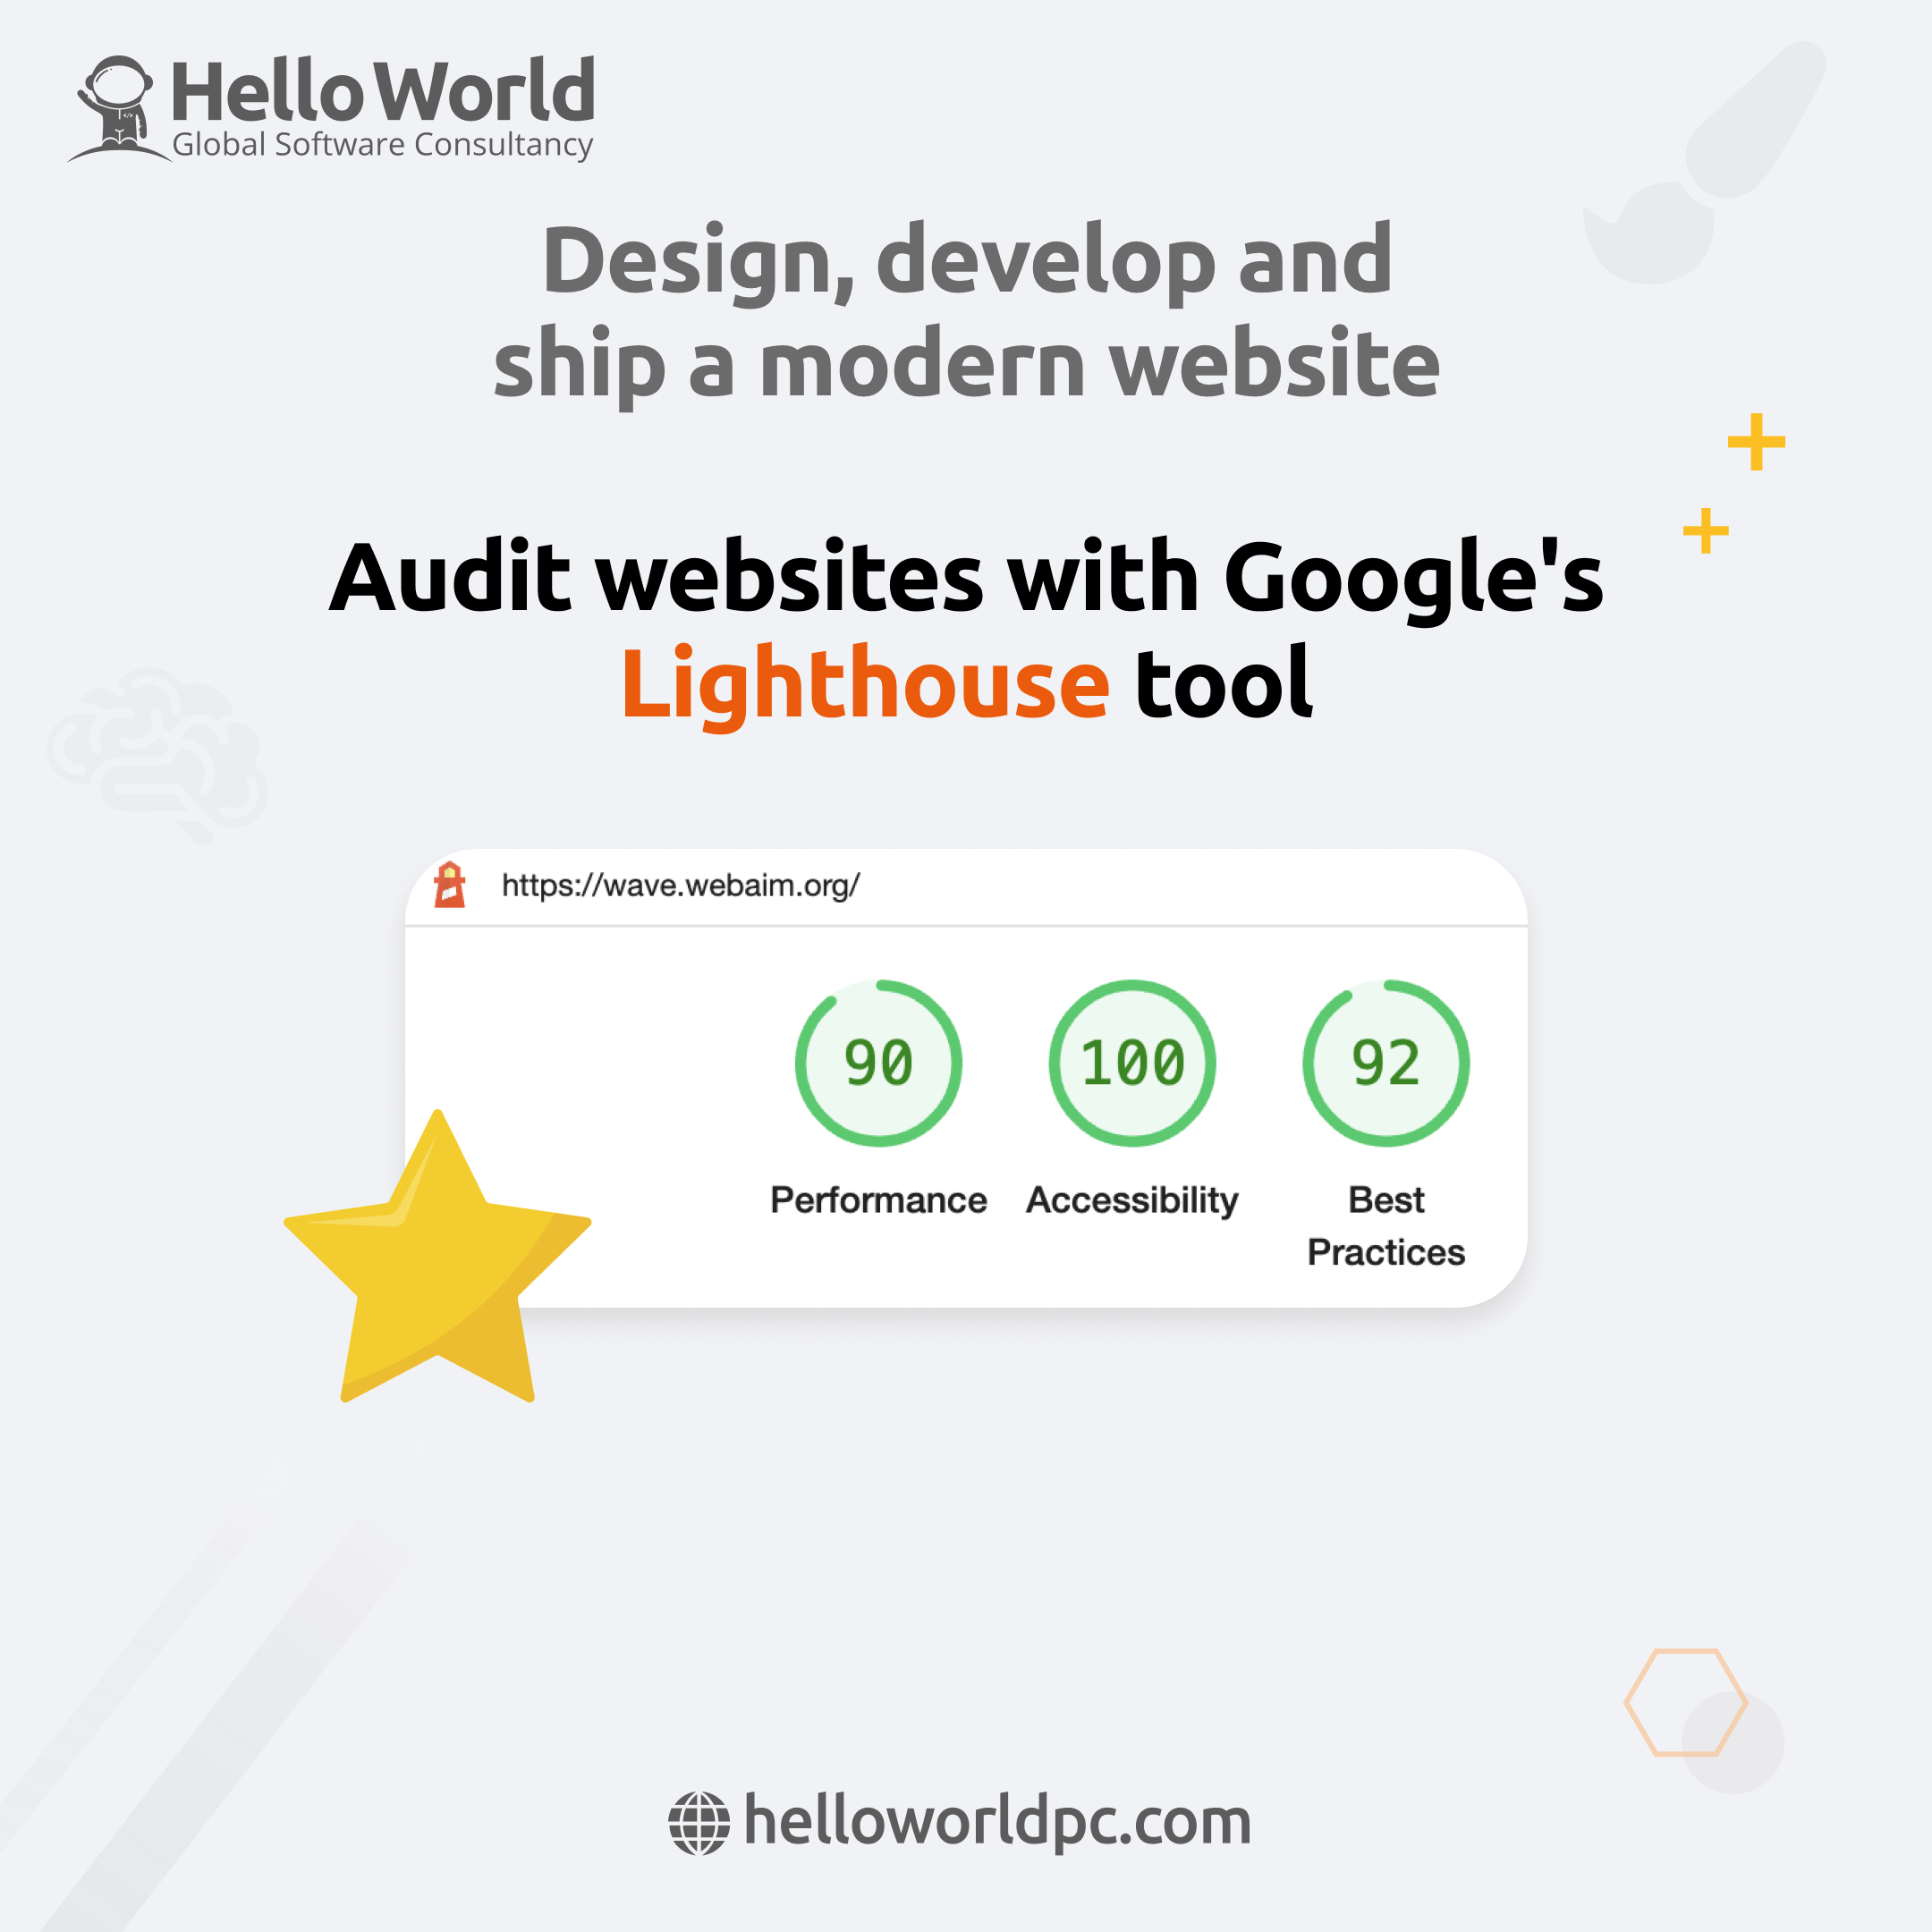 Modern Website: Audit websites with Google's Lighthouse tool